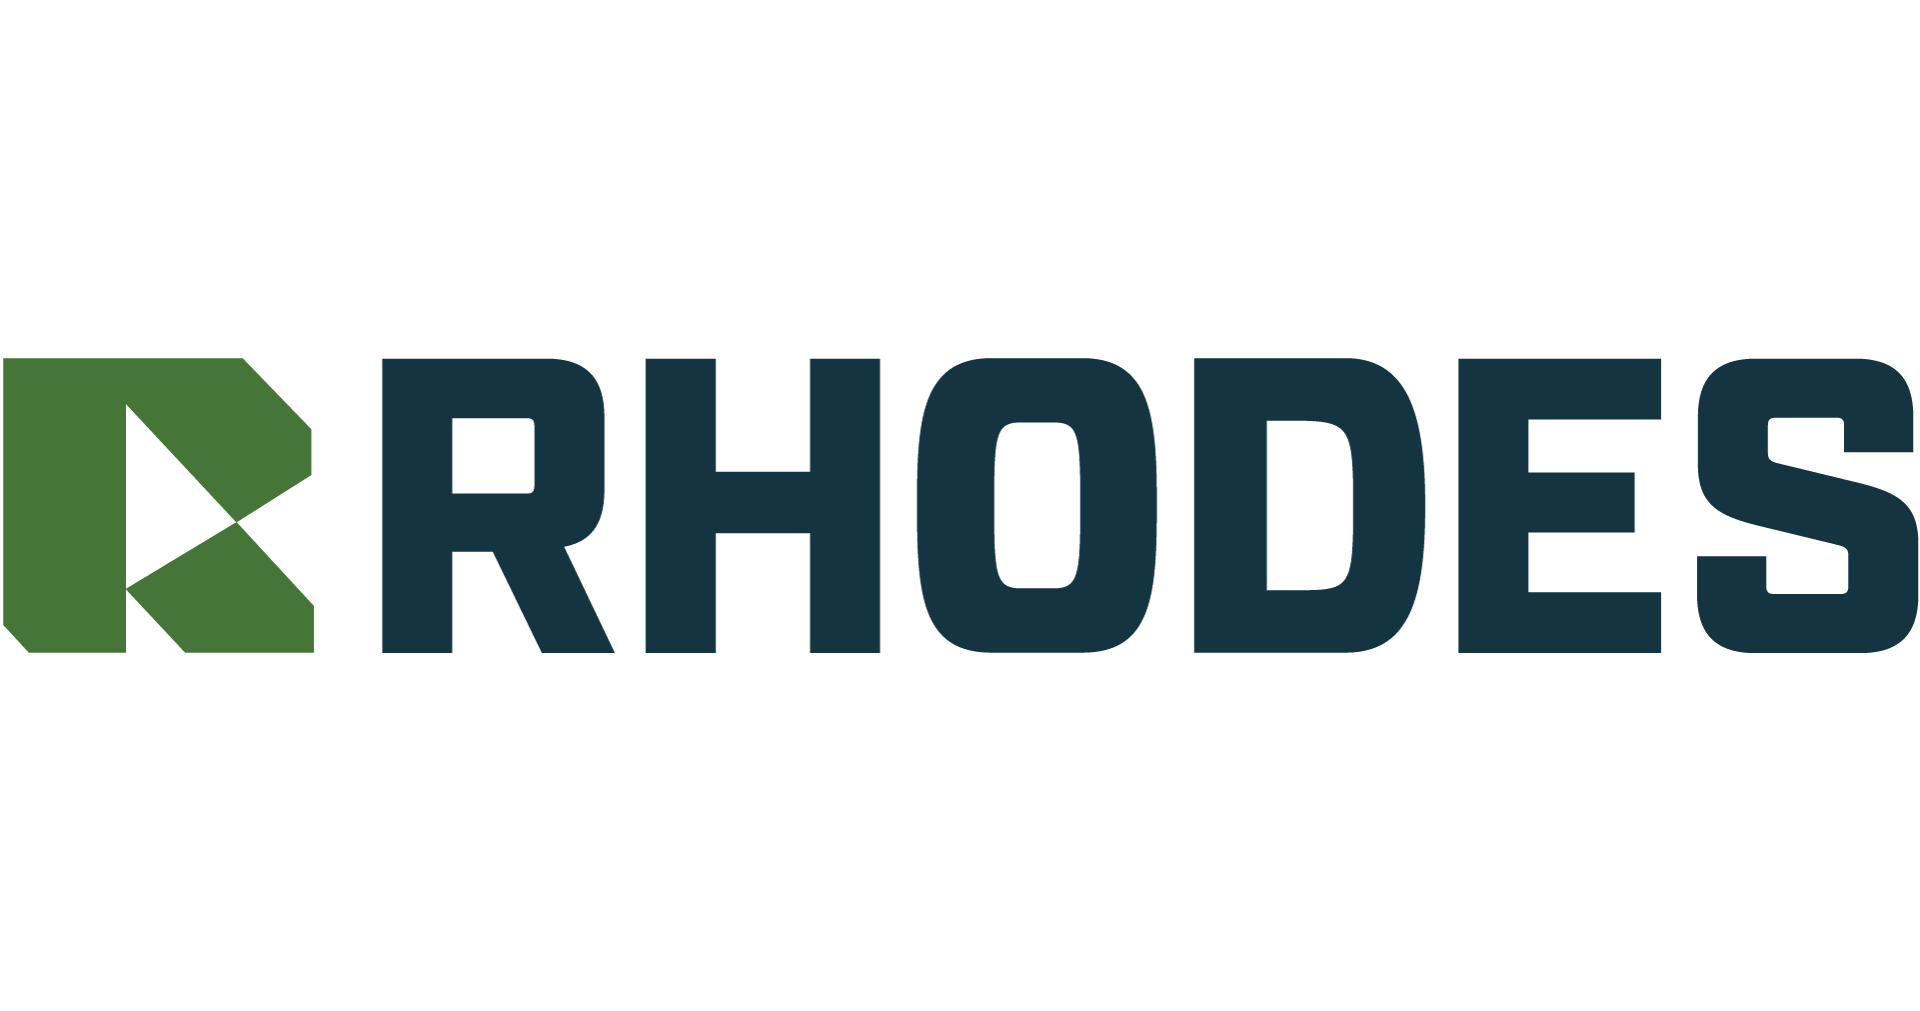 Rhodes Enterprises - Job Opportunities